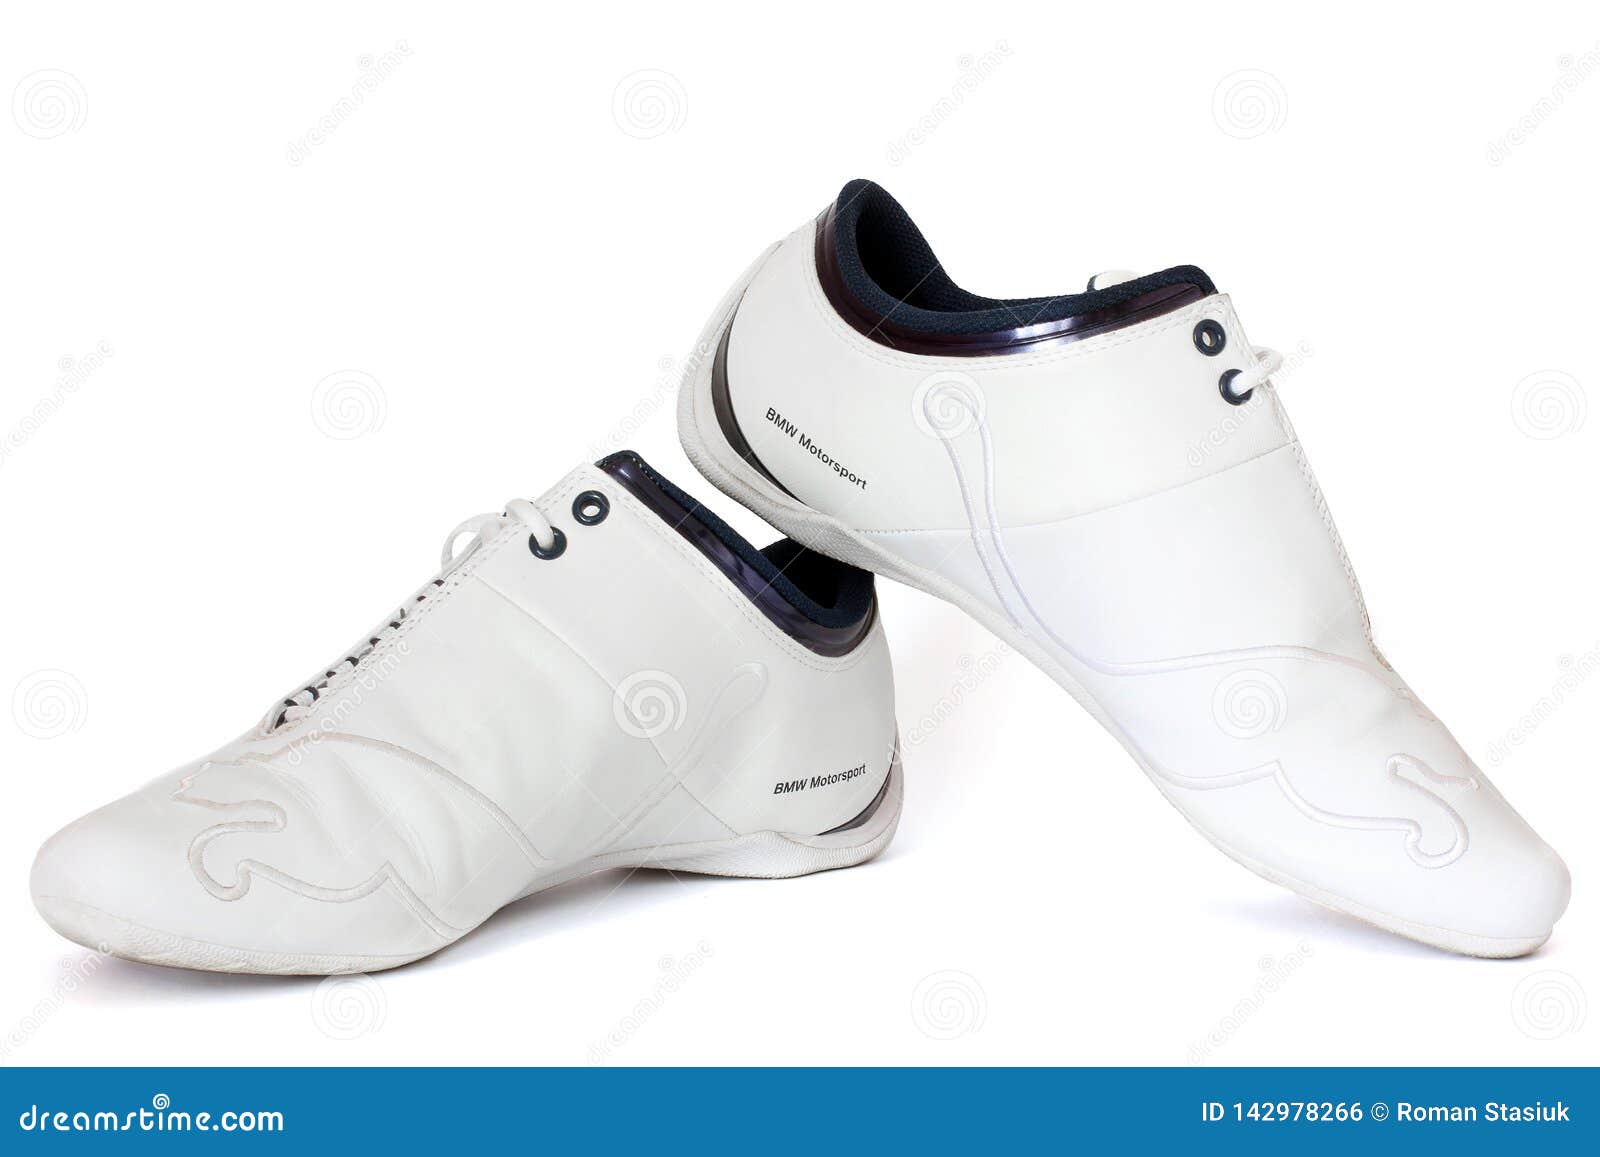 puma bmw motorsport shoes white